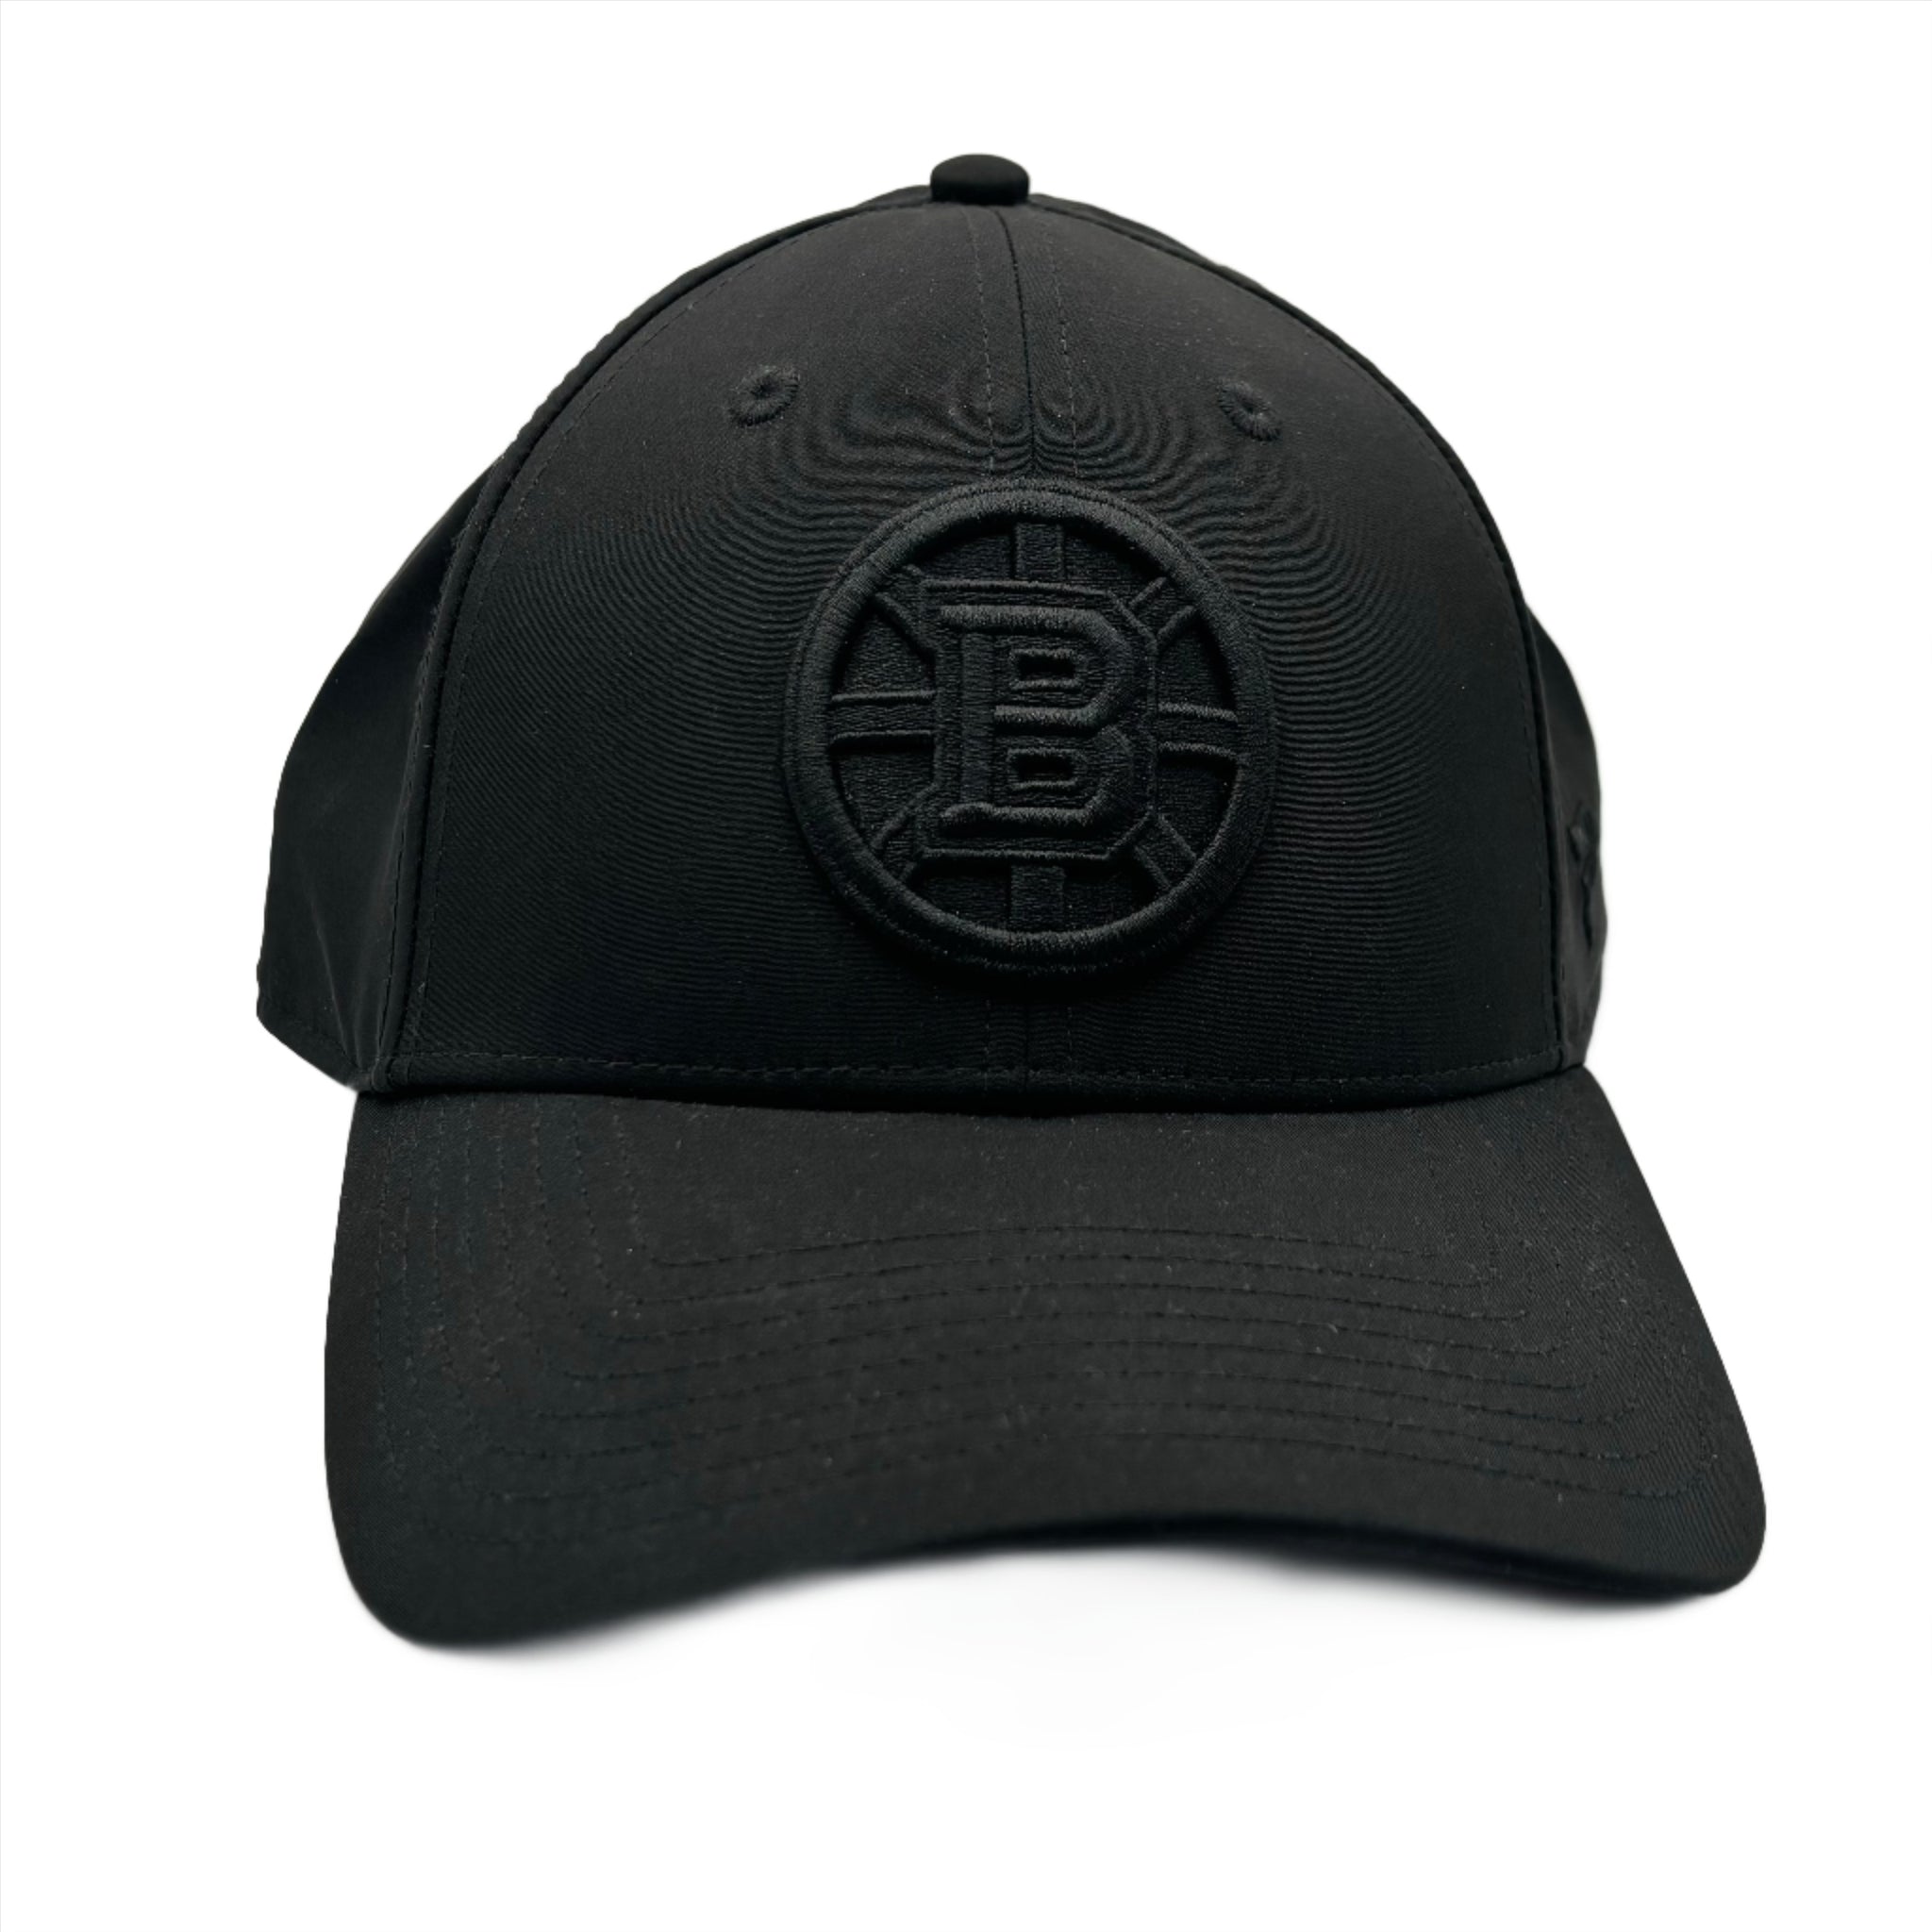 Boston Bruins Fanatics Black on Black Adjustable Hat